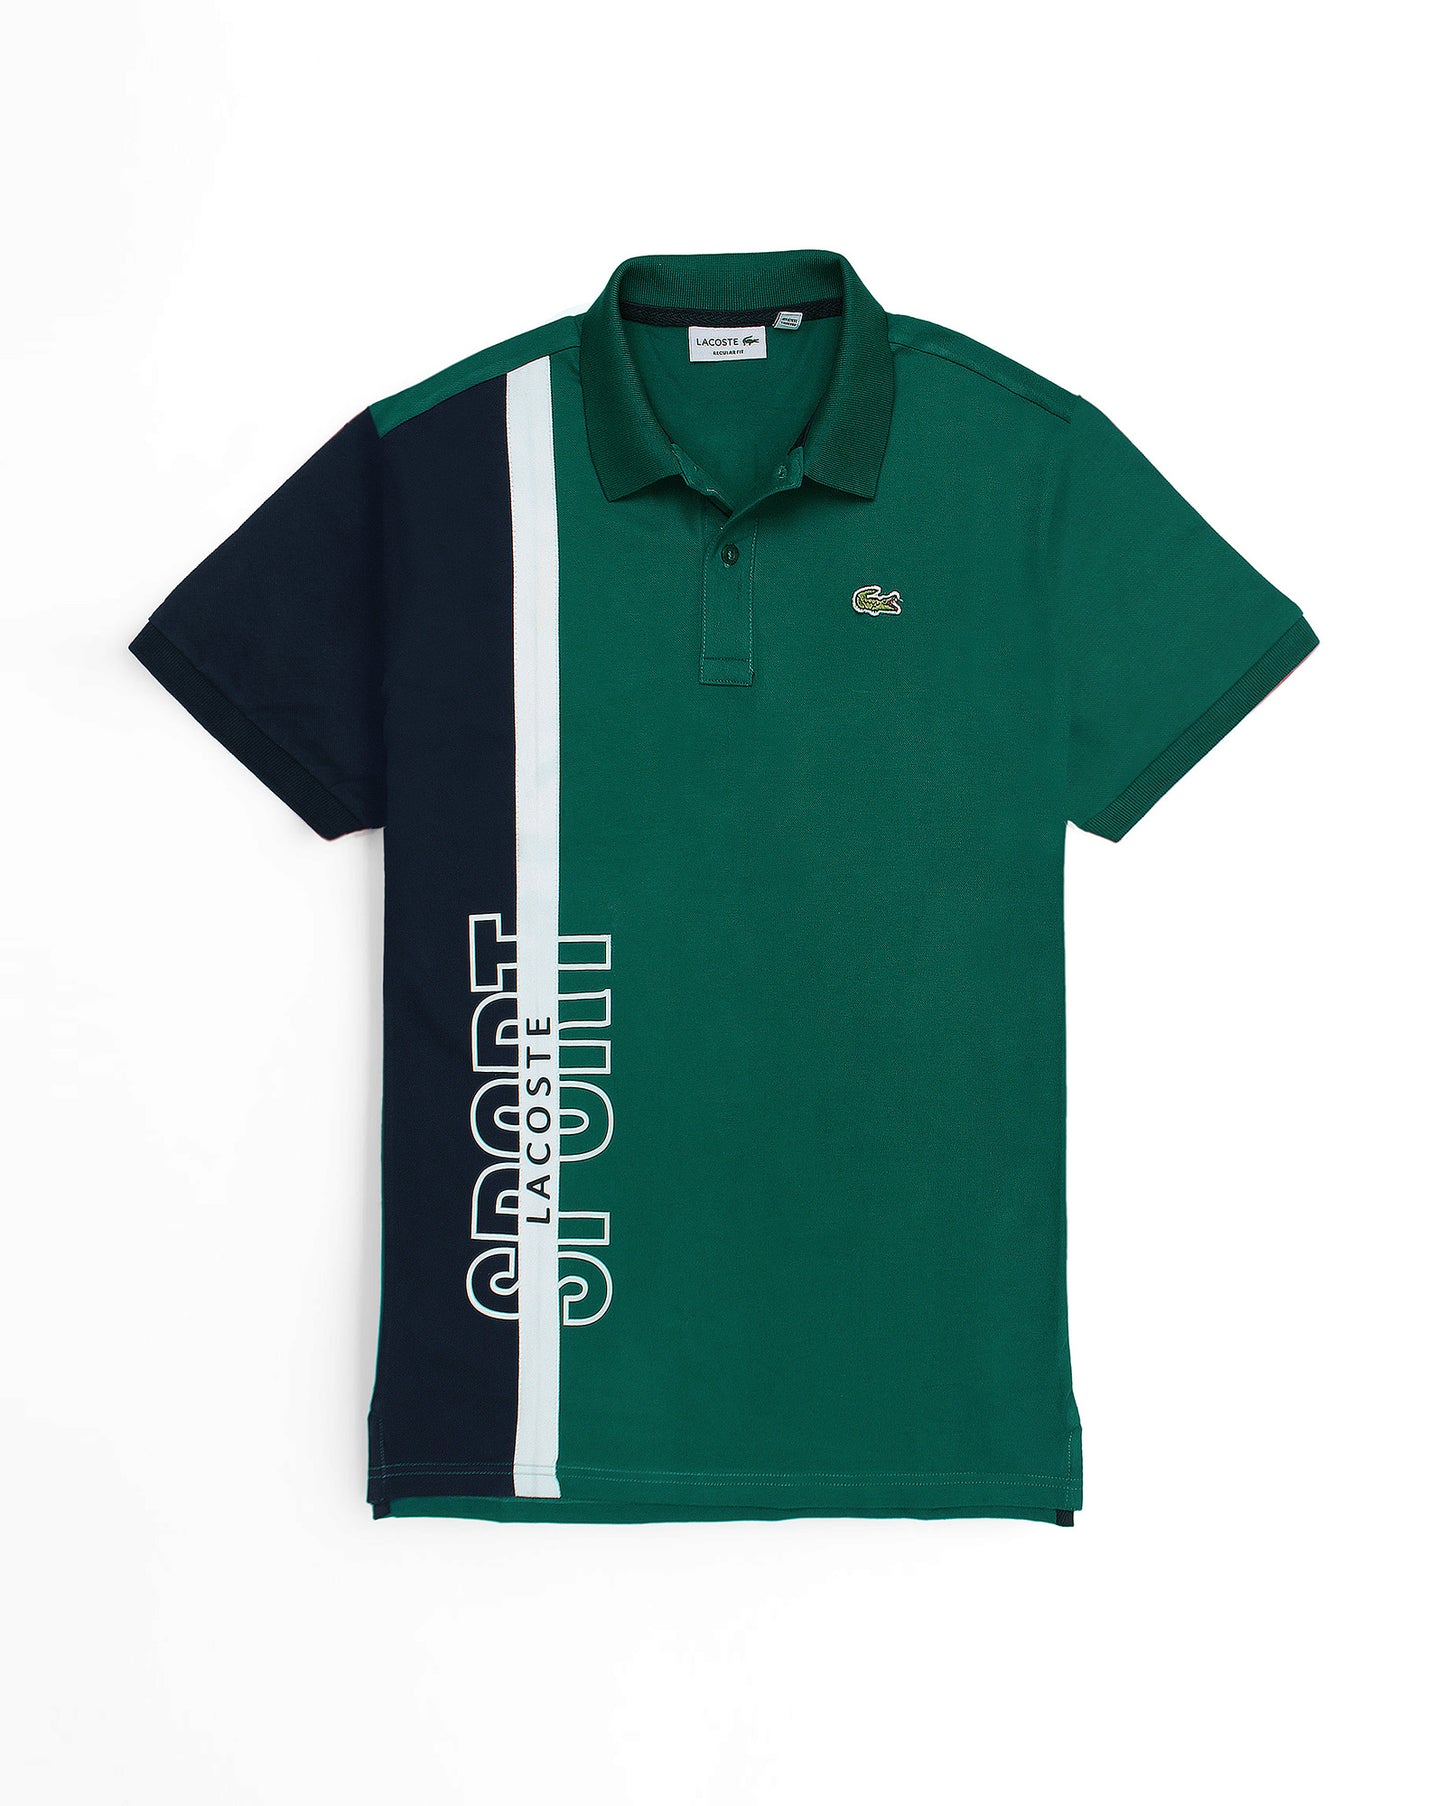 Premium Ls/ct Sports Polo - Green & Black